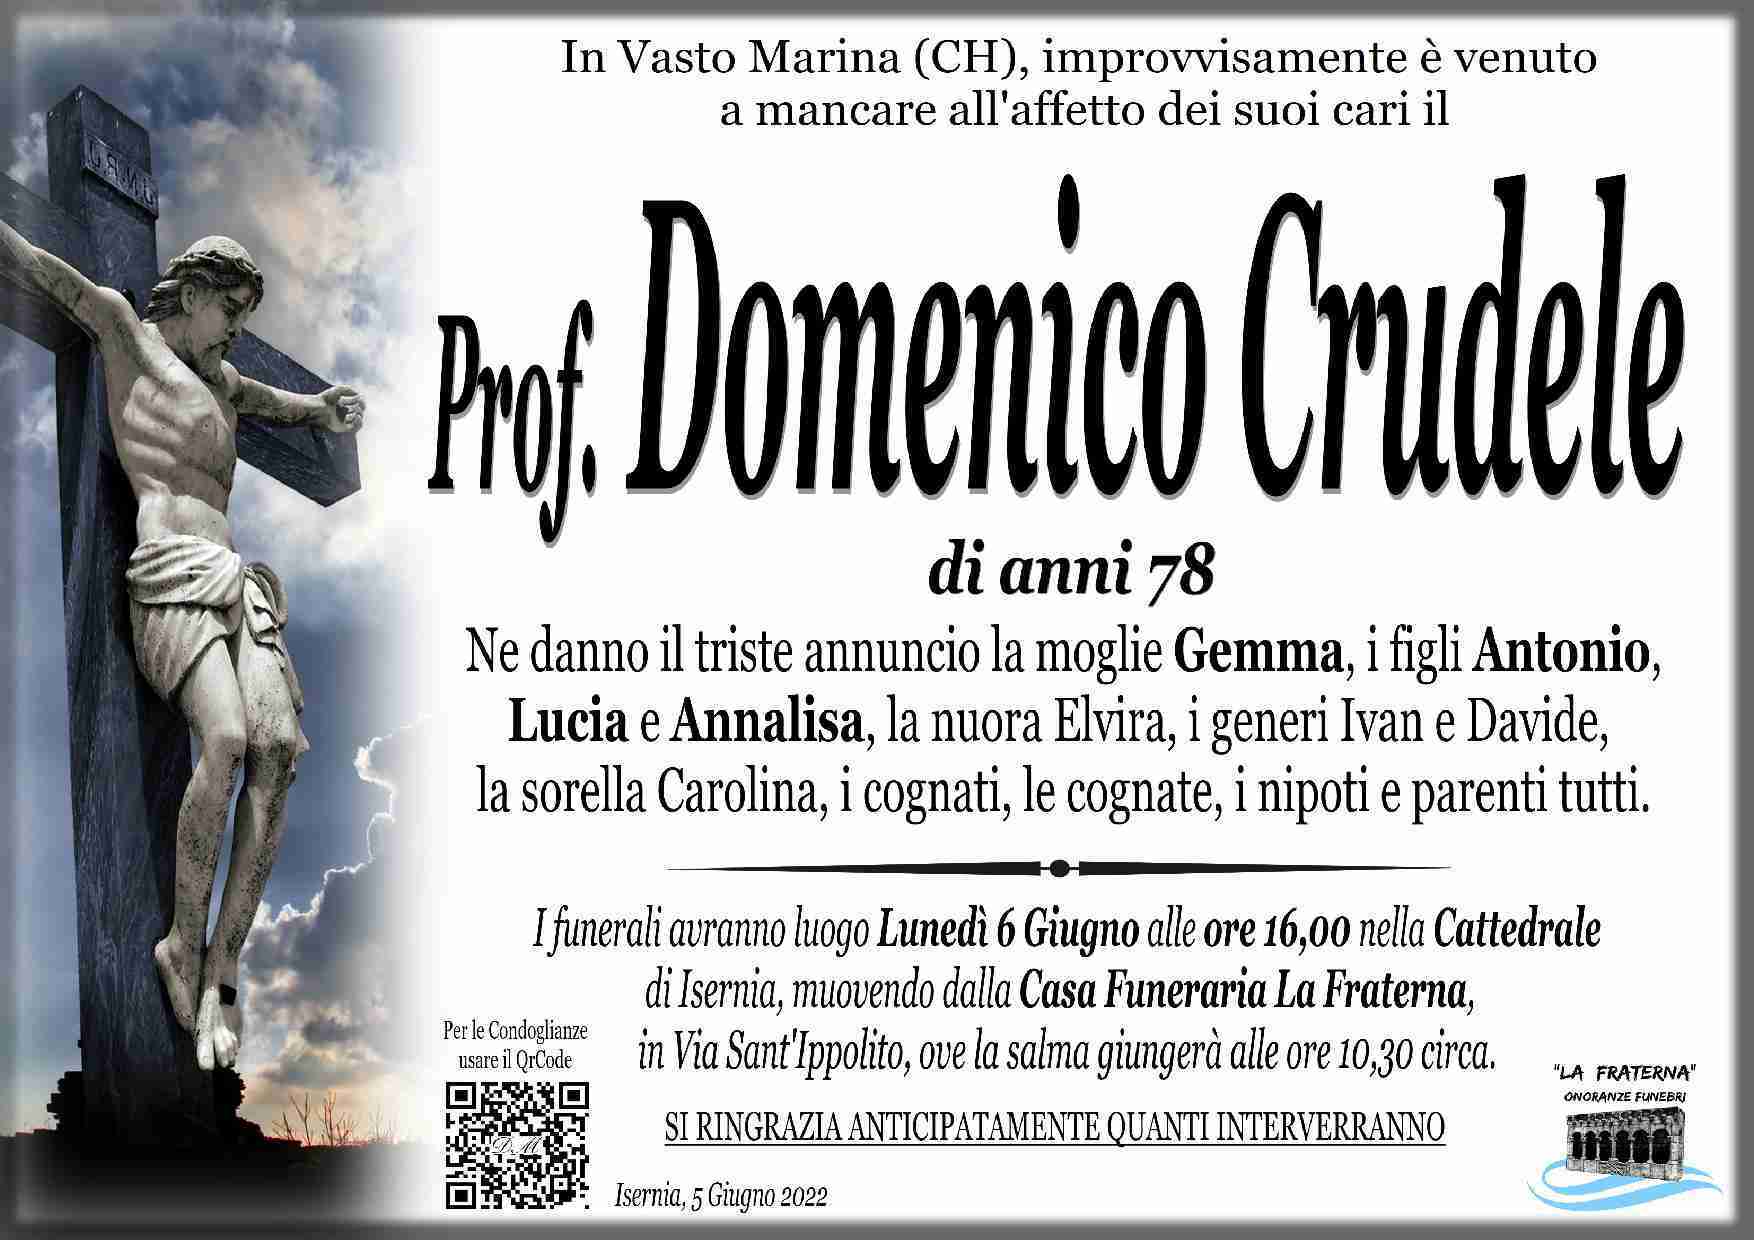 Domenico Crudele